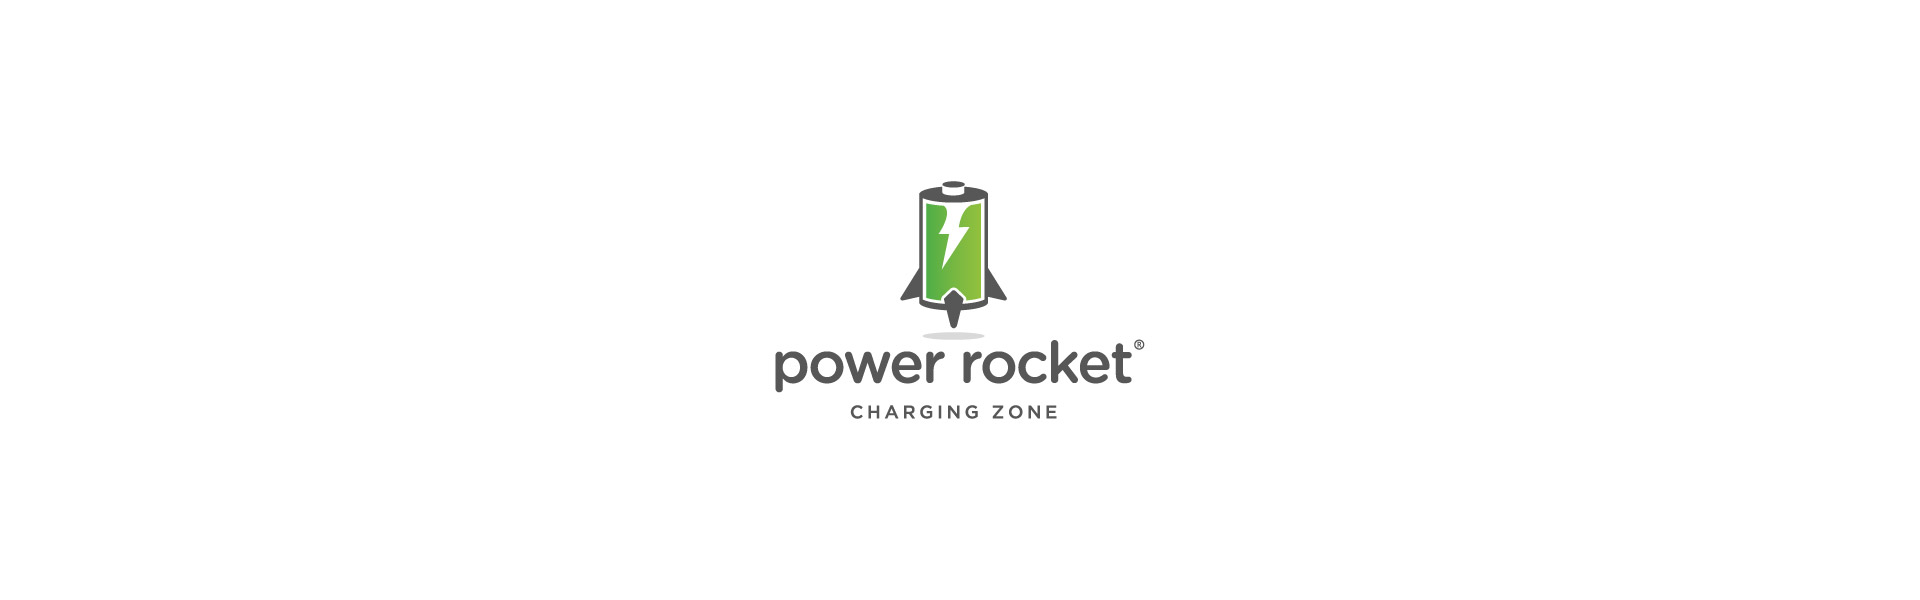 Logos-Instudio-Power-Rocket